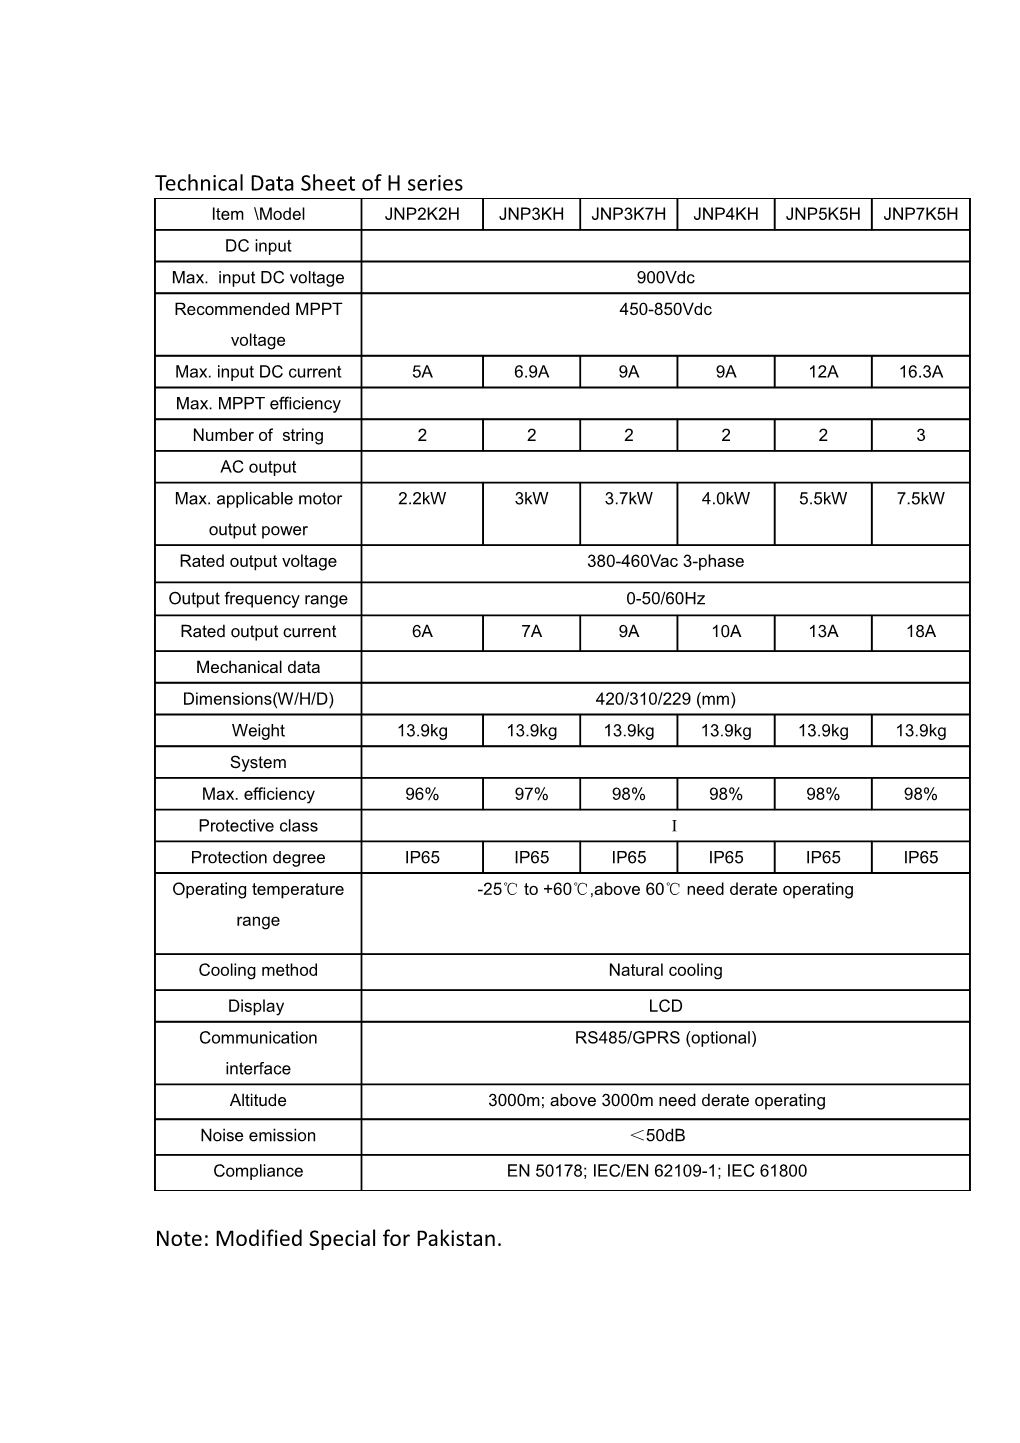 Technical Data Sheet of H Series